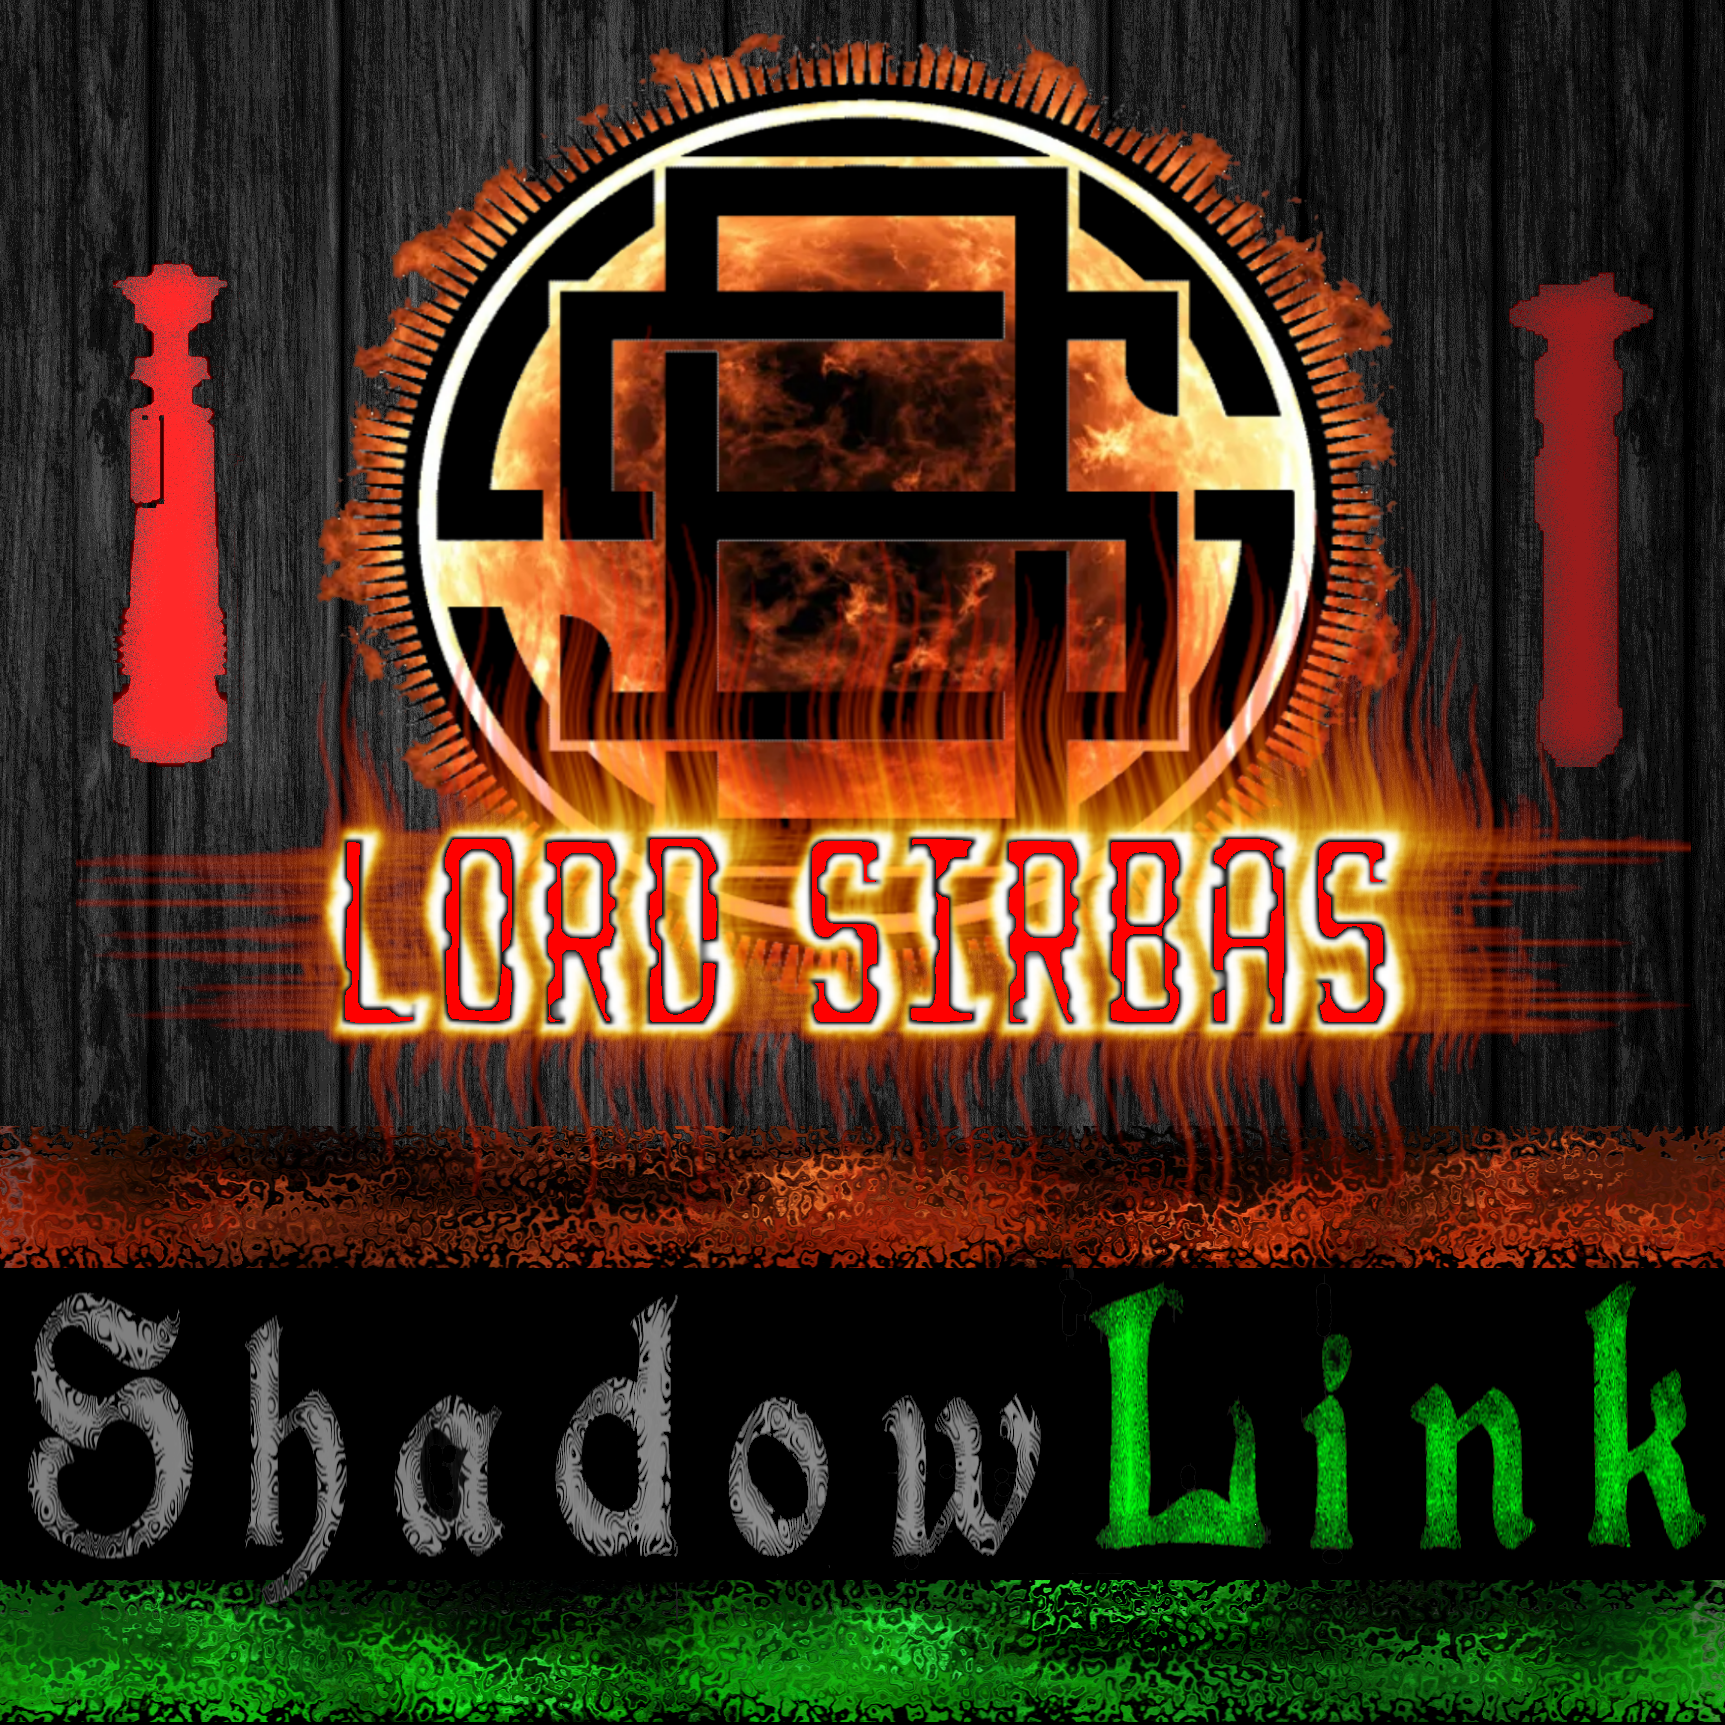 "Shadow Link" SoundFont for CFX, Proffie, Golden Harvest, & XenoPixel